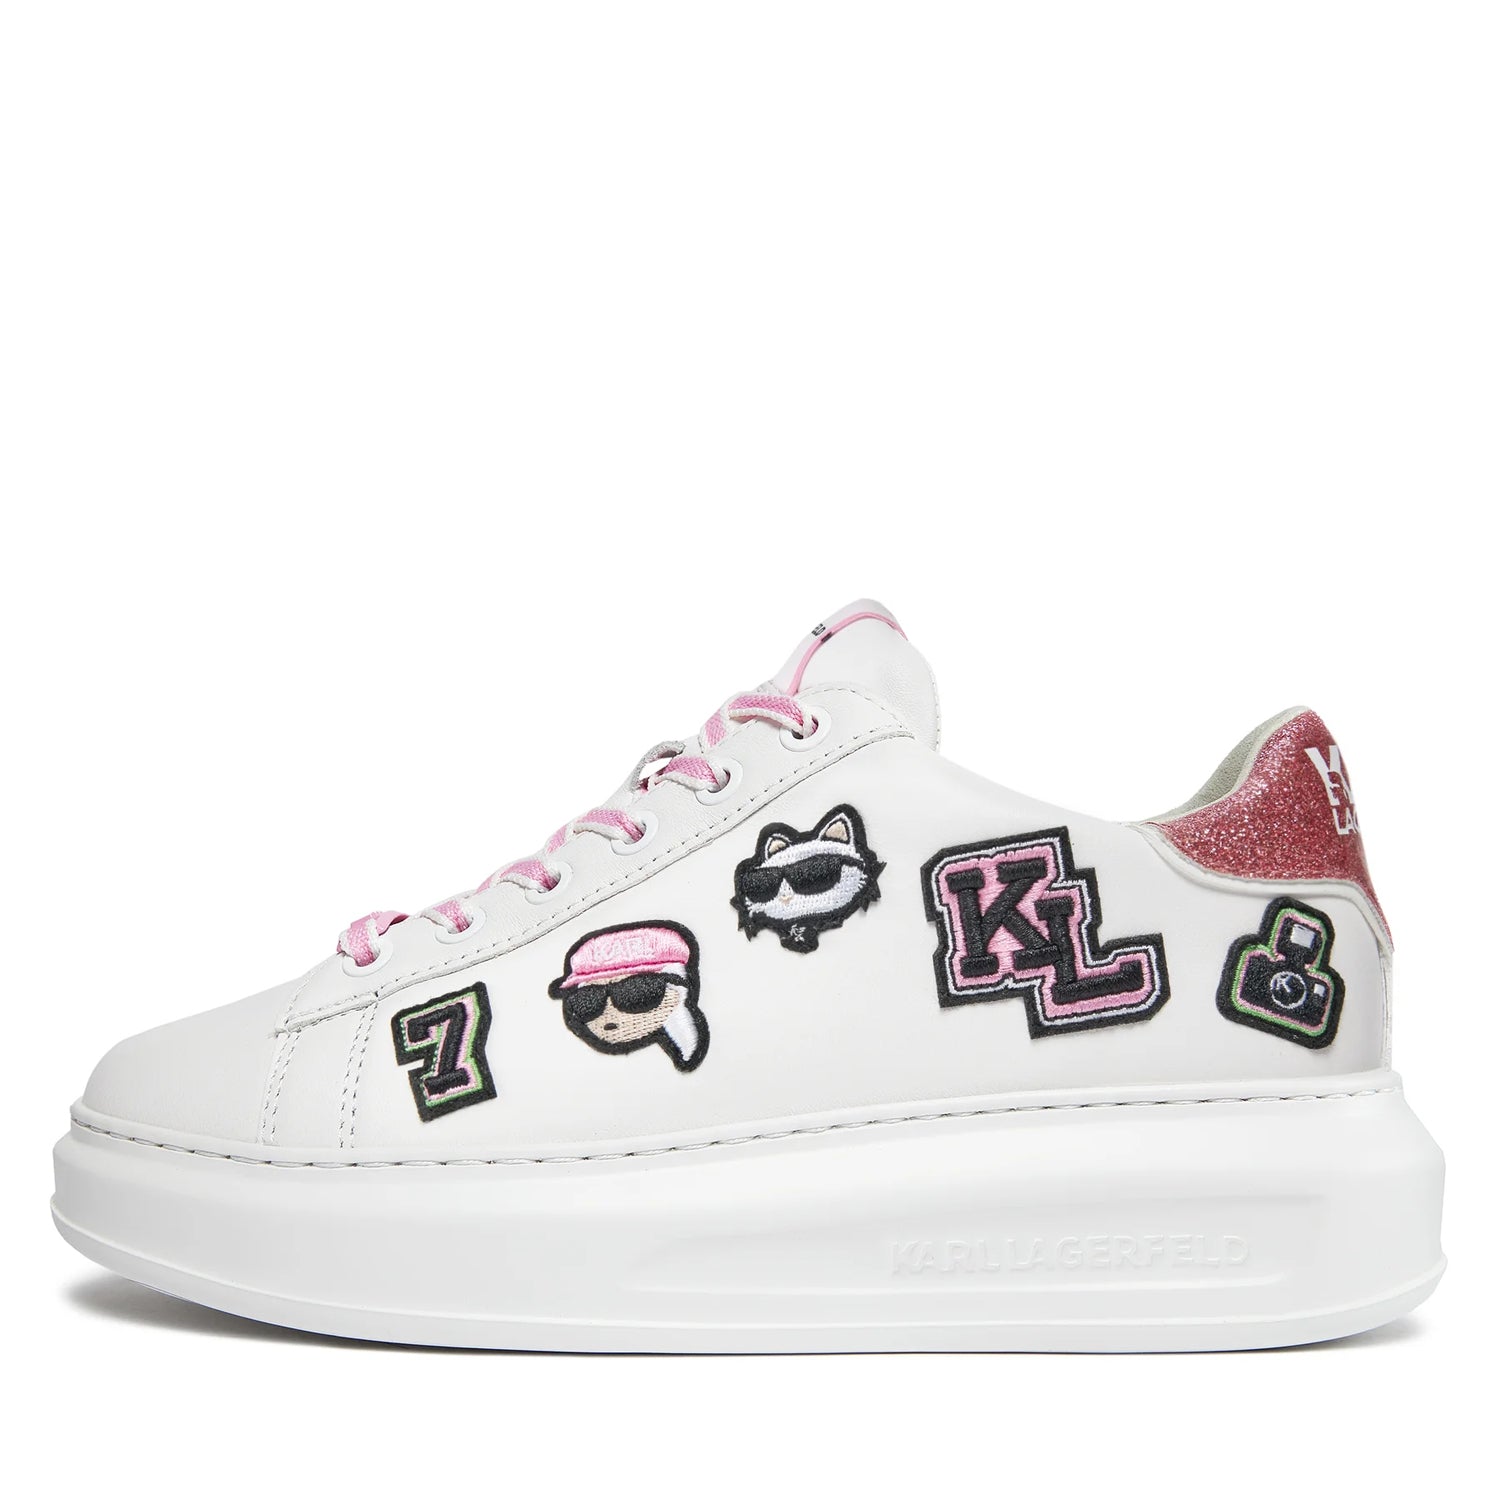 Karl Lagerfeld Sapatilhas Sneakers Shoes Kl62574 Whi Pink Branco Rosa_shot5